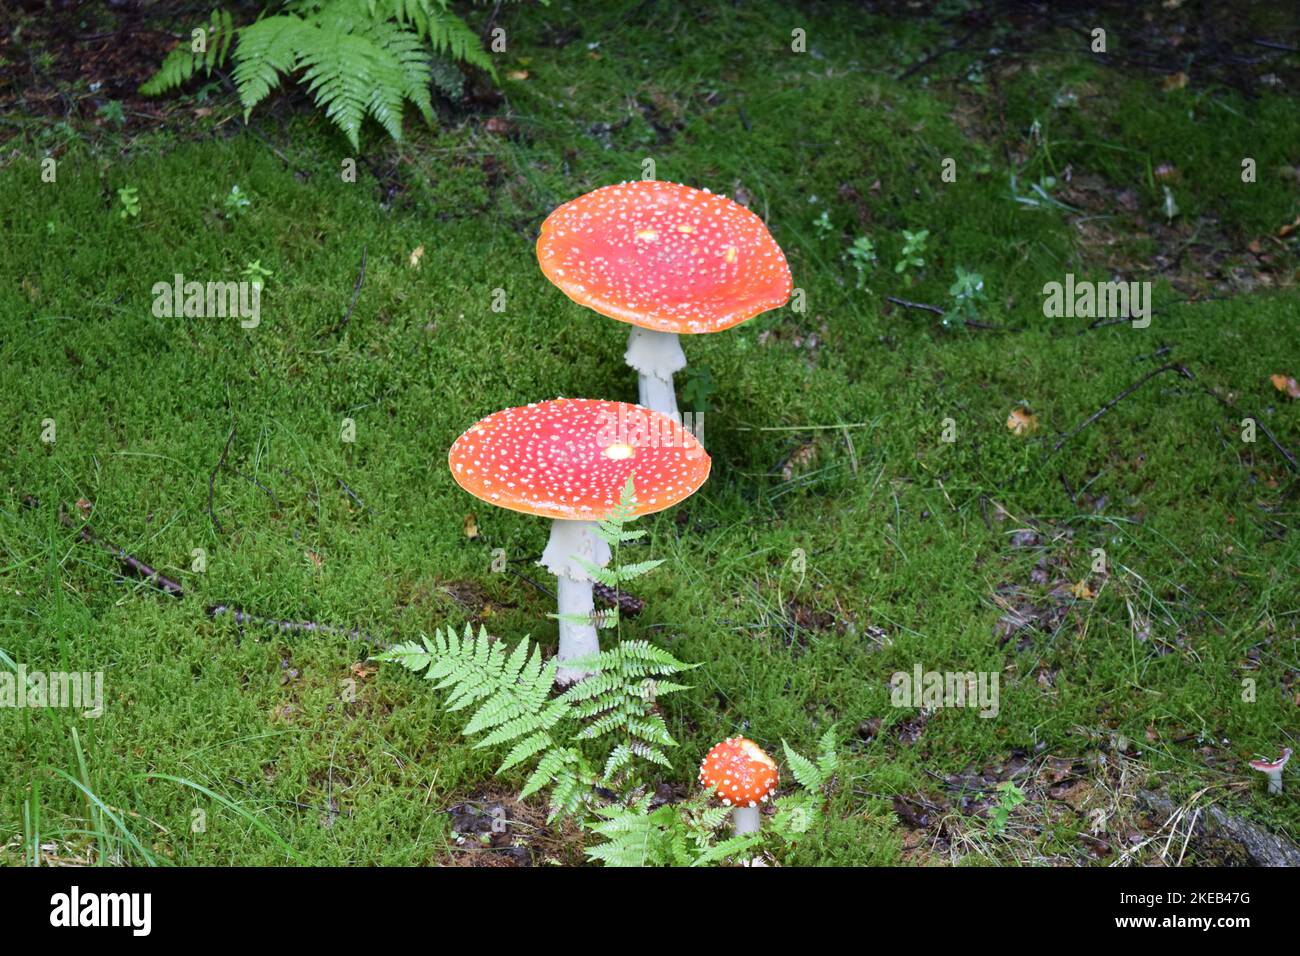 Rot-weiße Pilze, Rotkappen-Pilze mit weißen Warzenflecken. Stockfoto